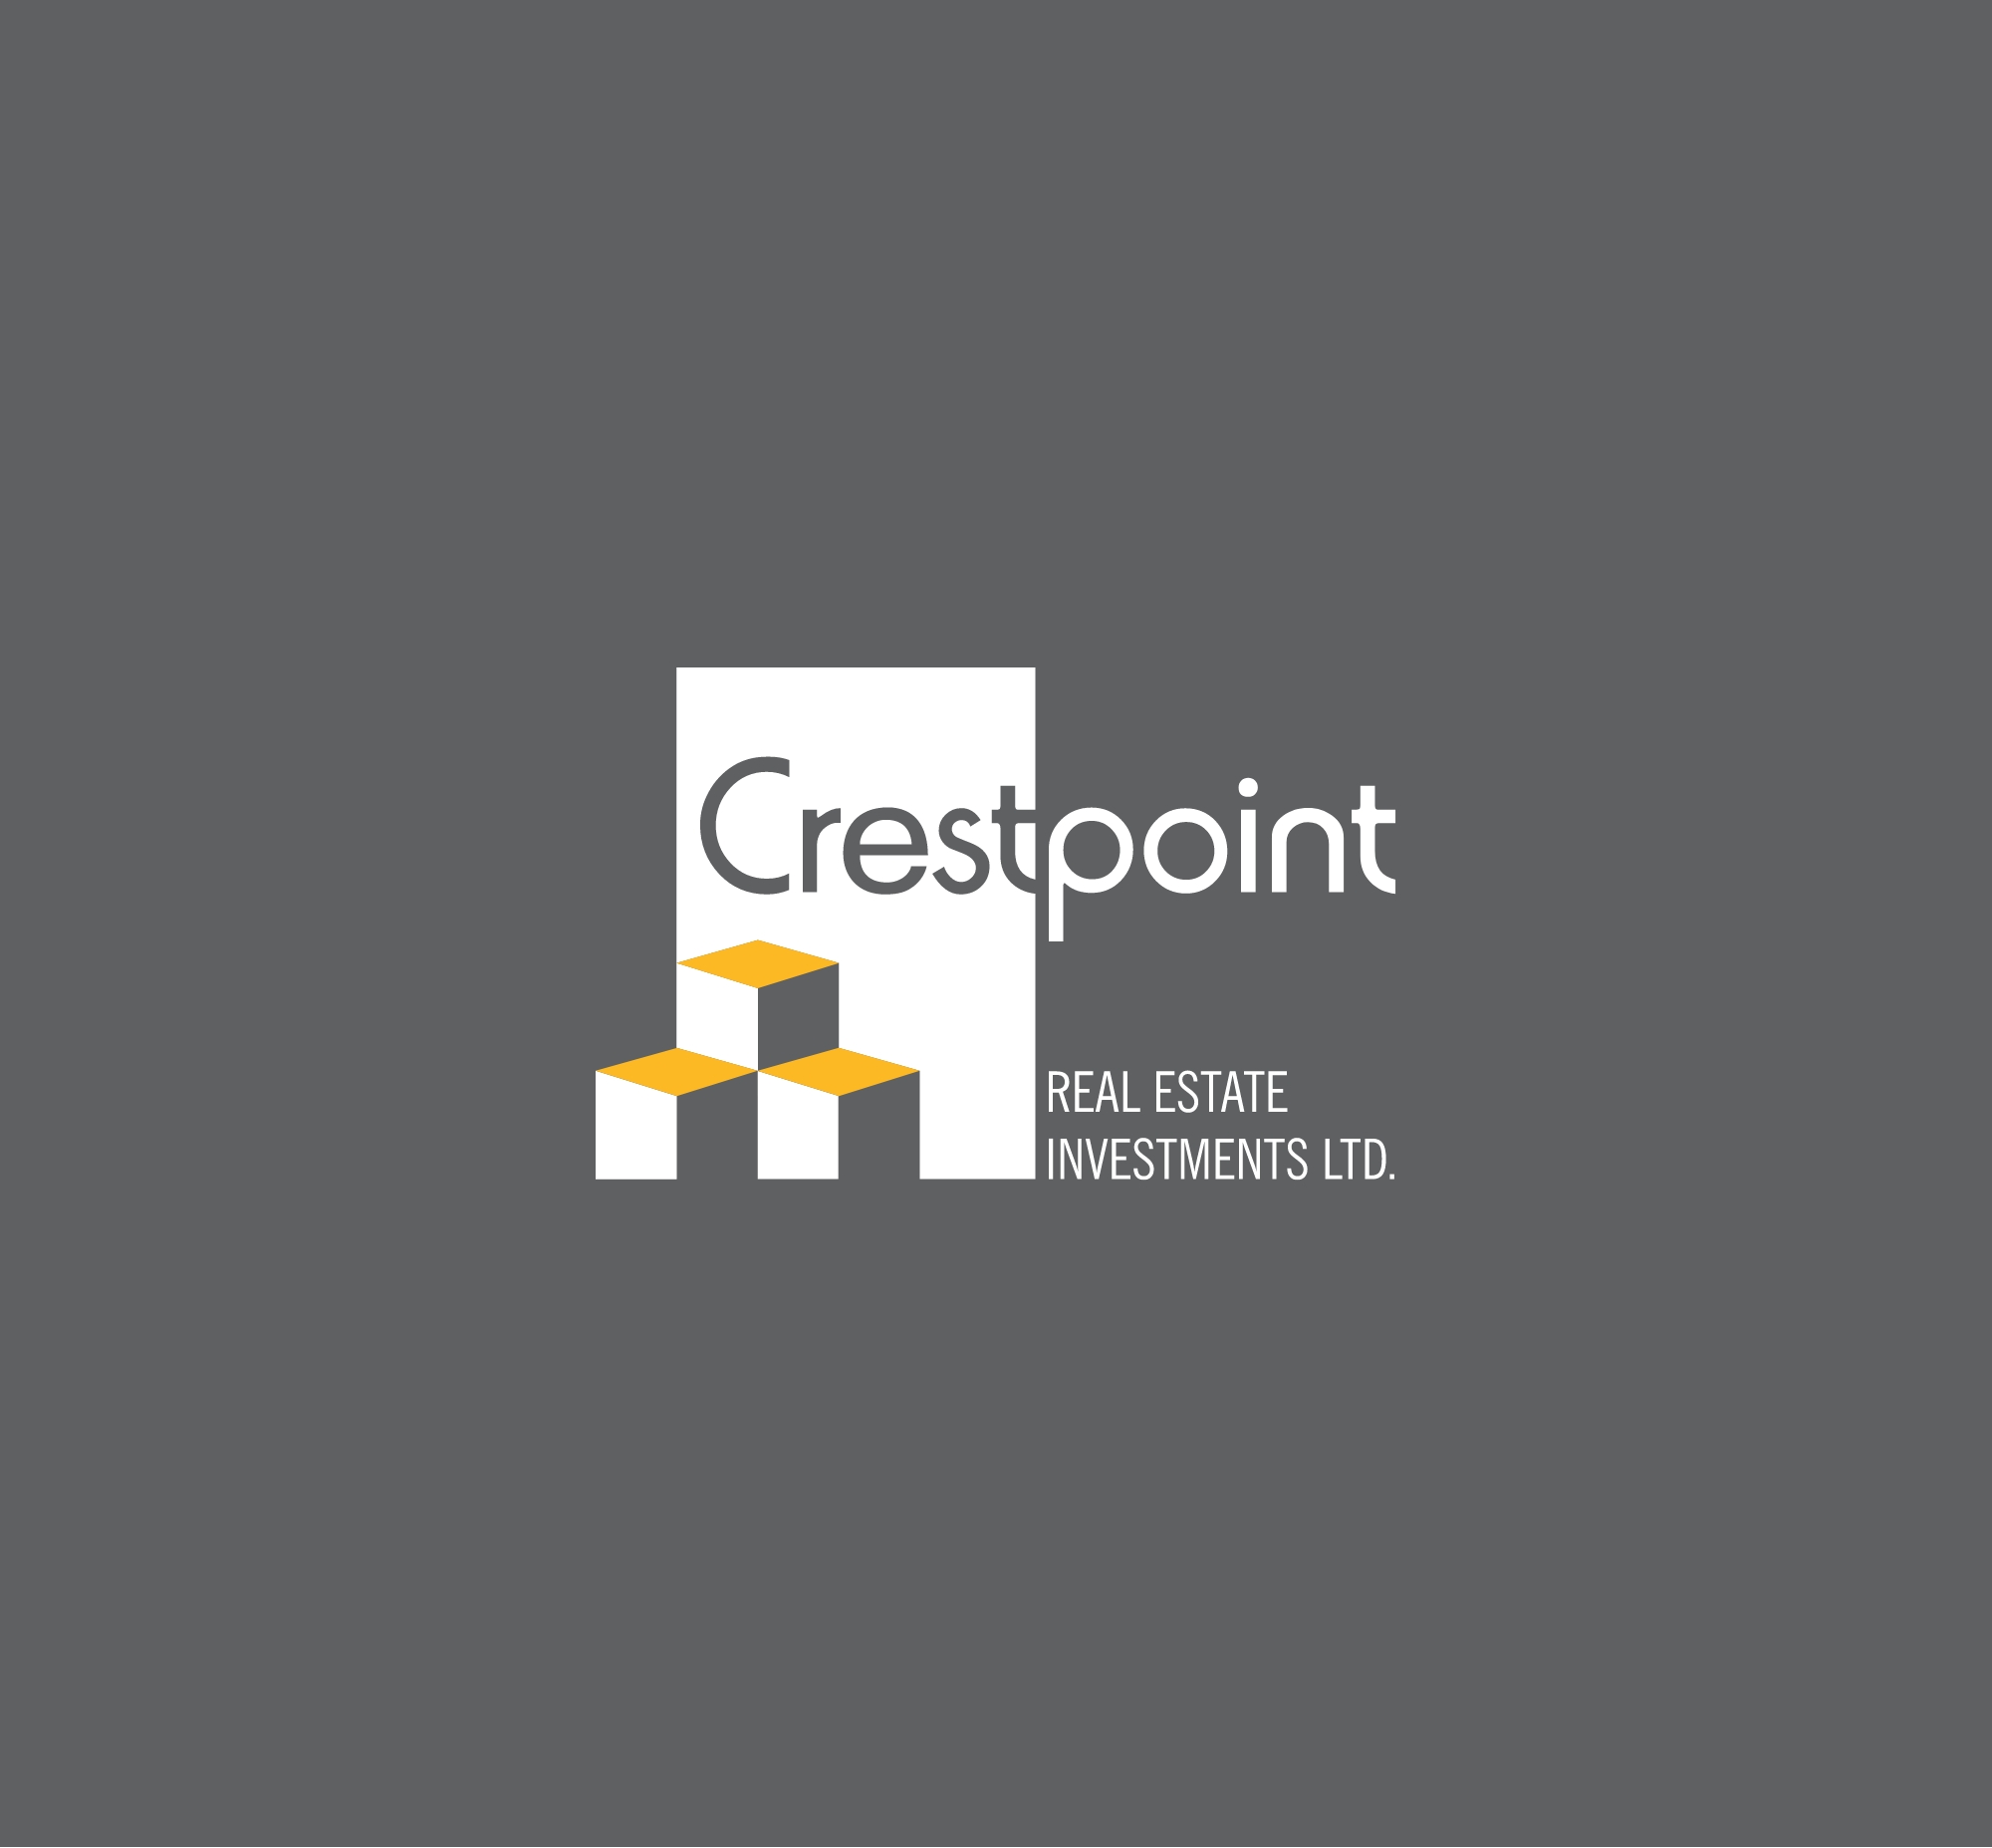 Crestpoint Real Estate Investments.